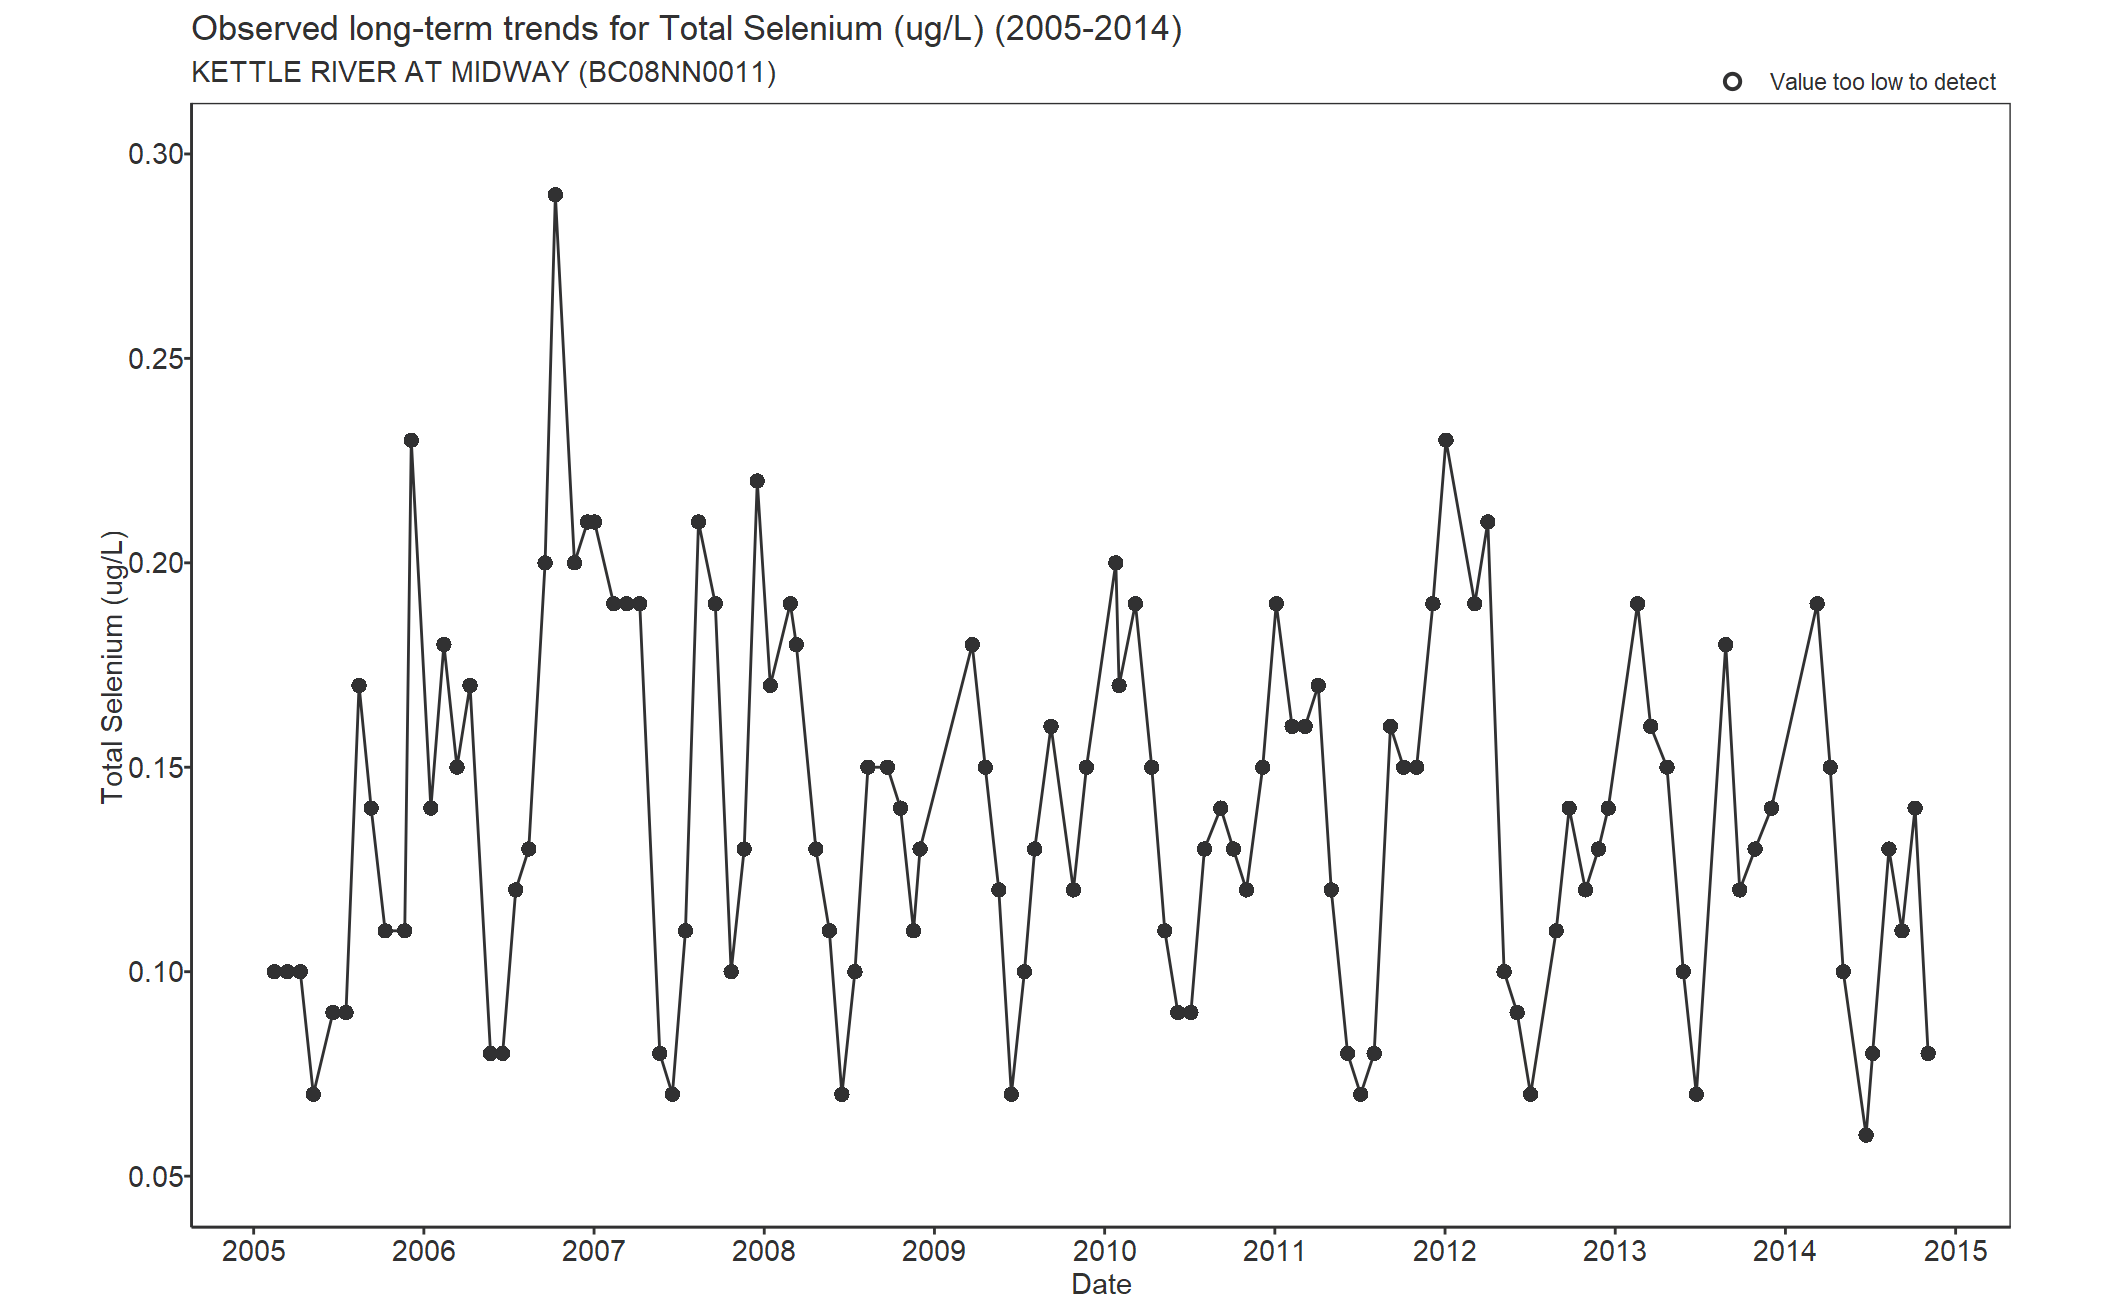 Observed long-term trends for Selenium Total (2005-2014)